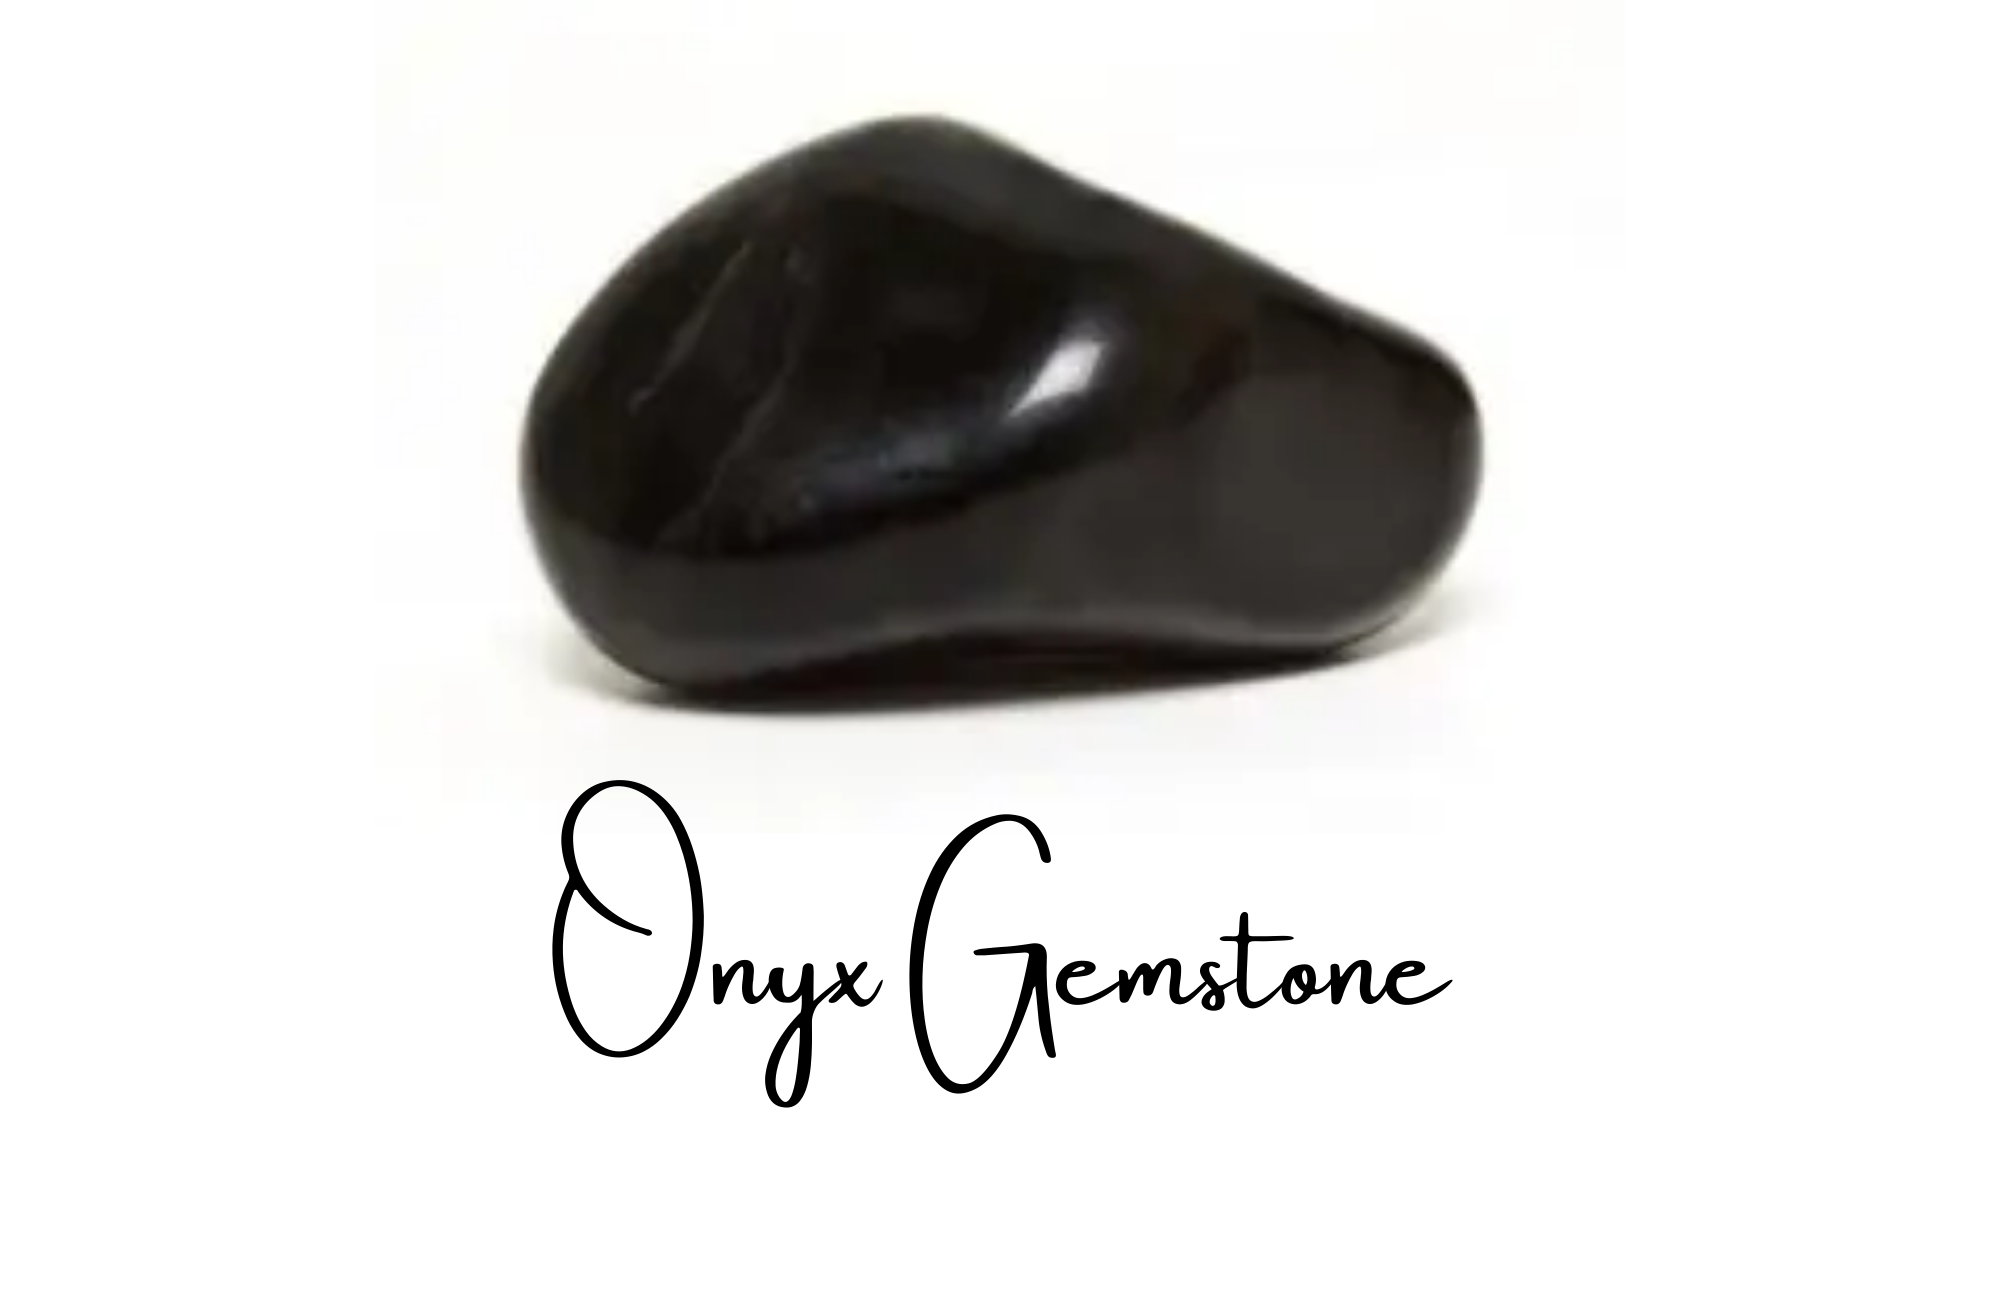 Black onyx stone